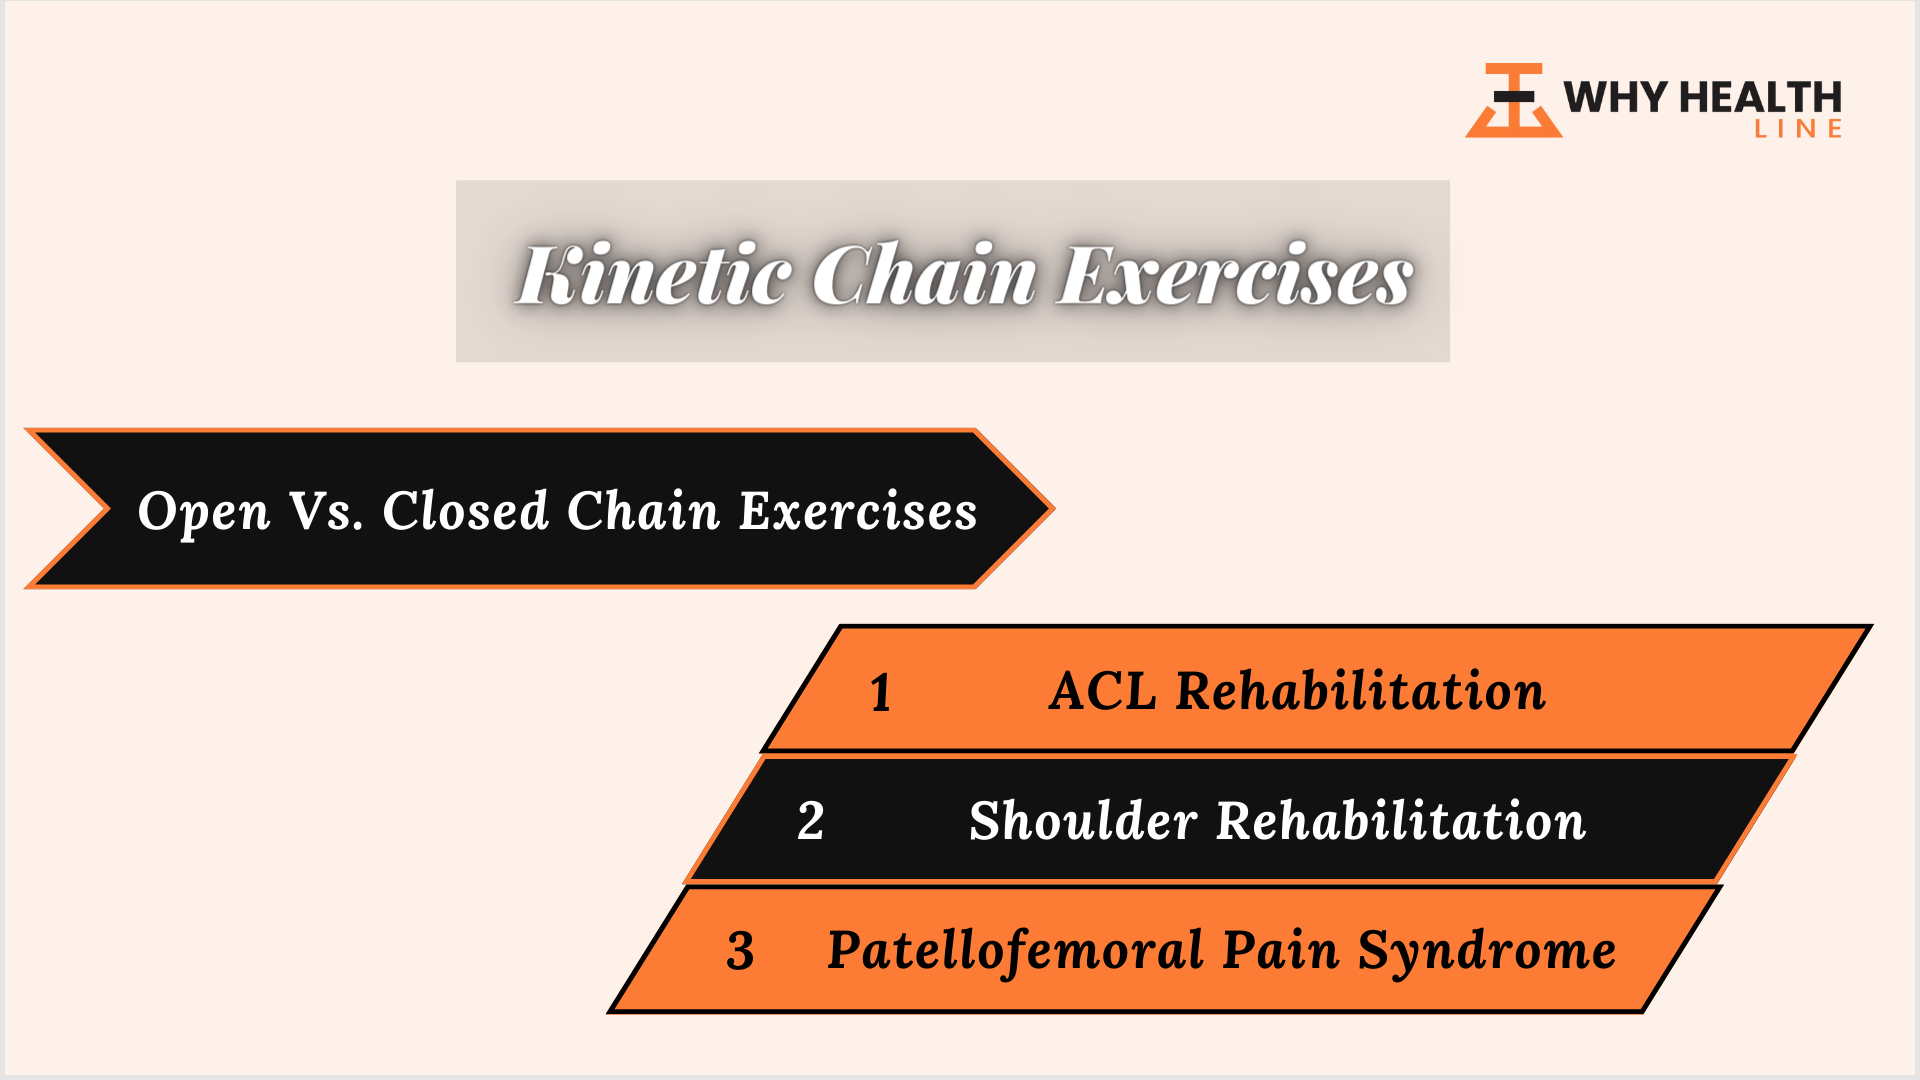 Kinetic Chain Exercises